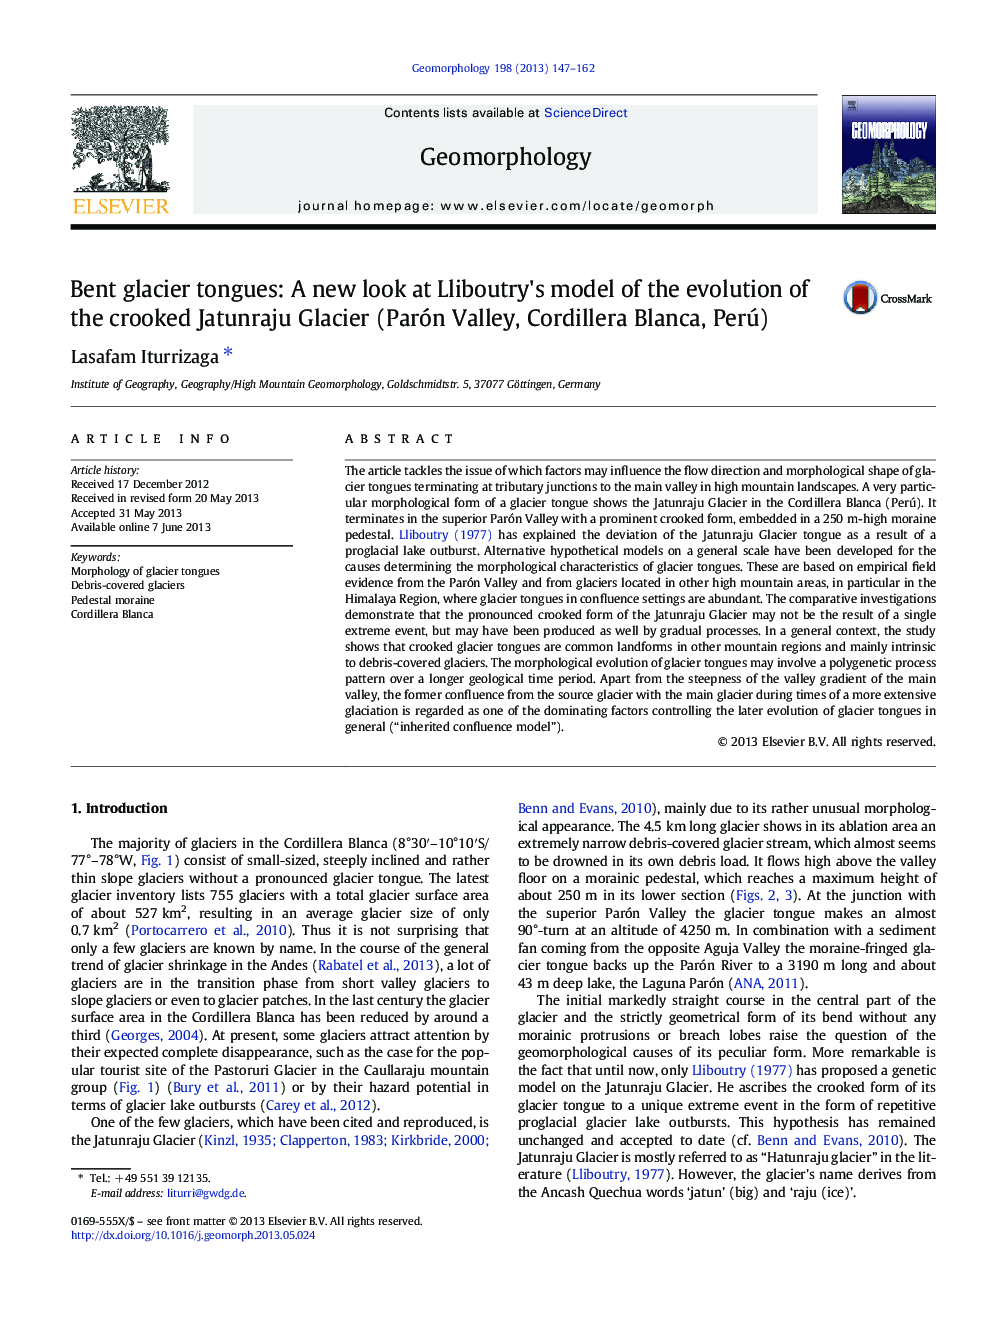 Bent glacier tongues: A new look at Lliboutry's model of the evolution of the crooked Jatunraju Glacier (Parón Valley, Cordillera Blanca, Perú)